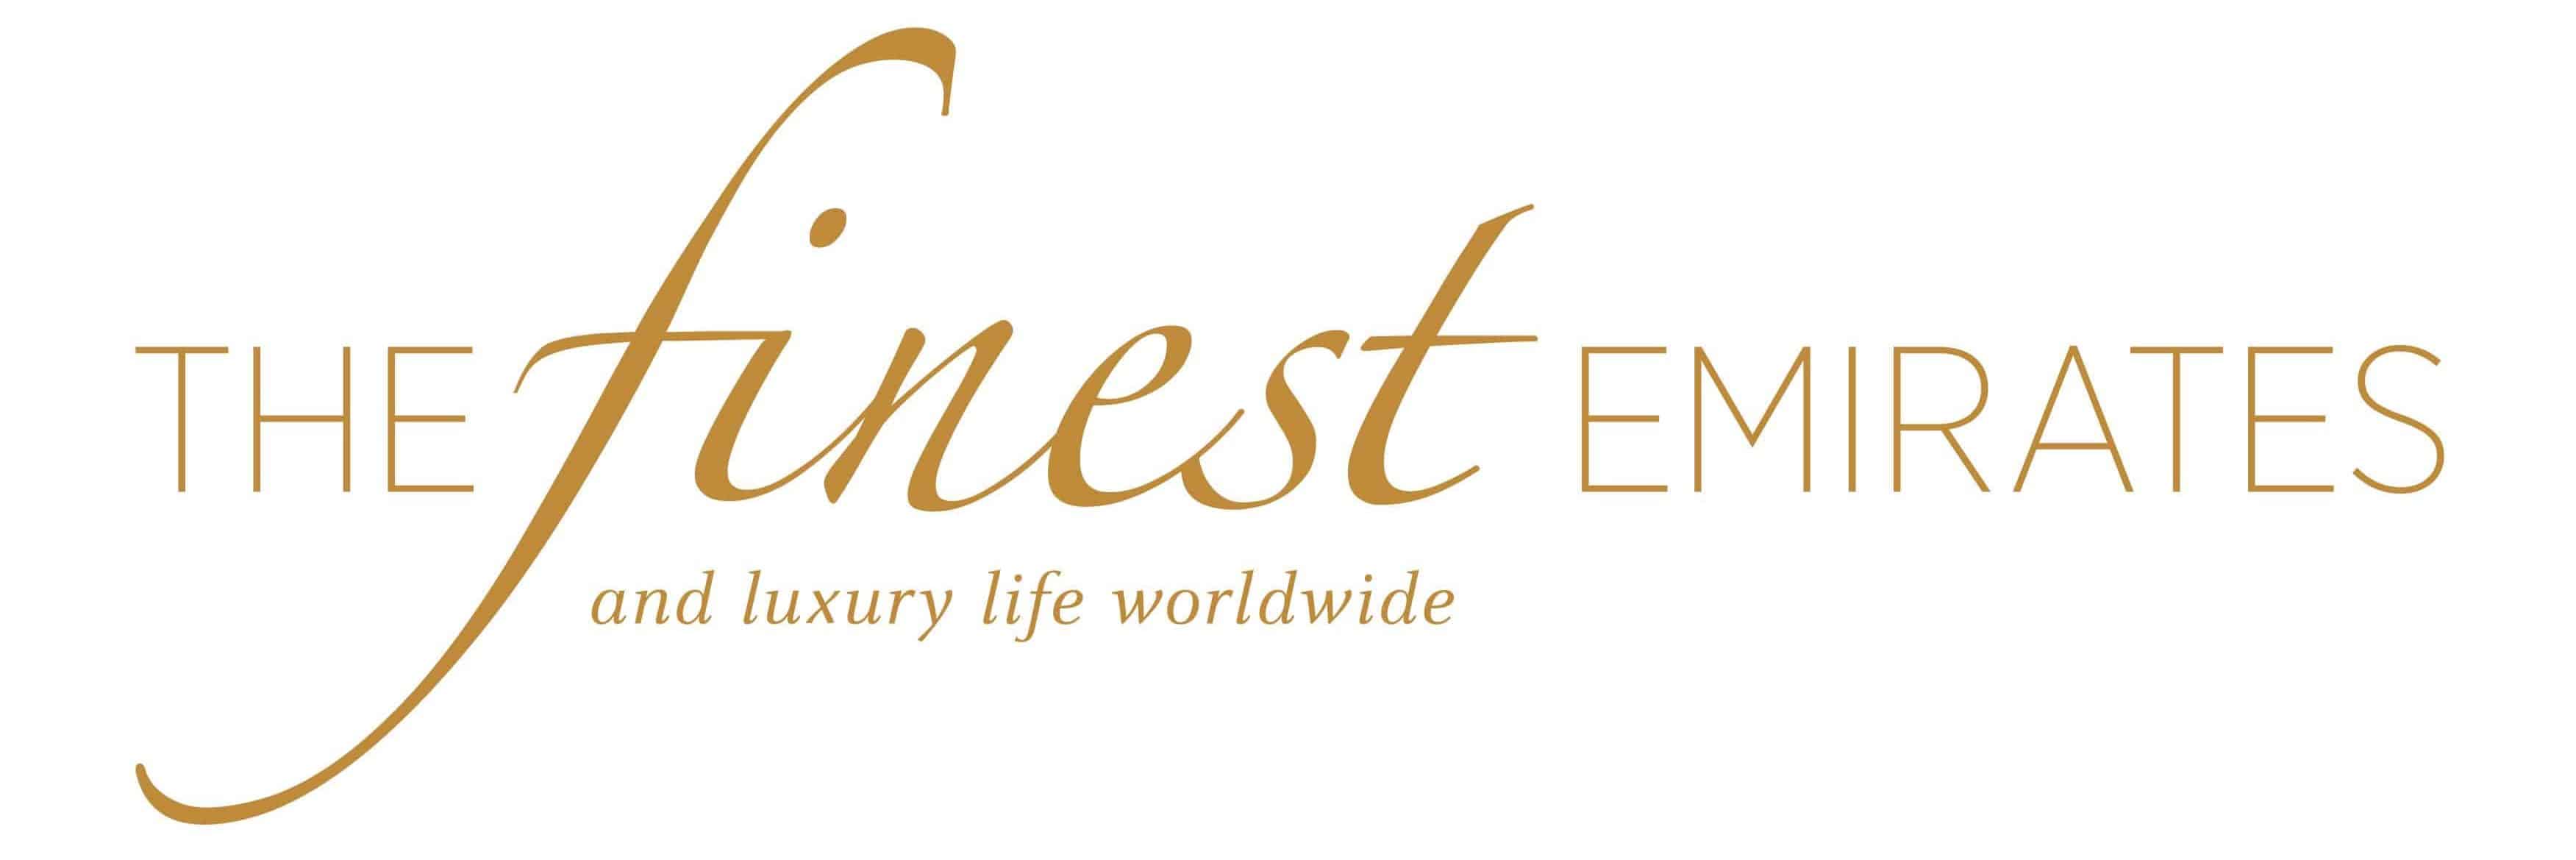 The finest Emirates | Luxus-Magazin: Lifestyle & Travel